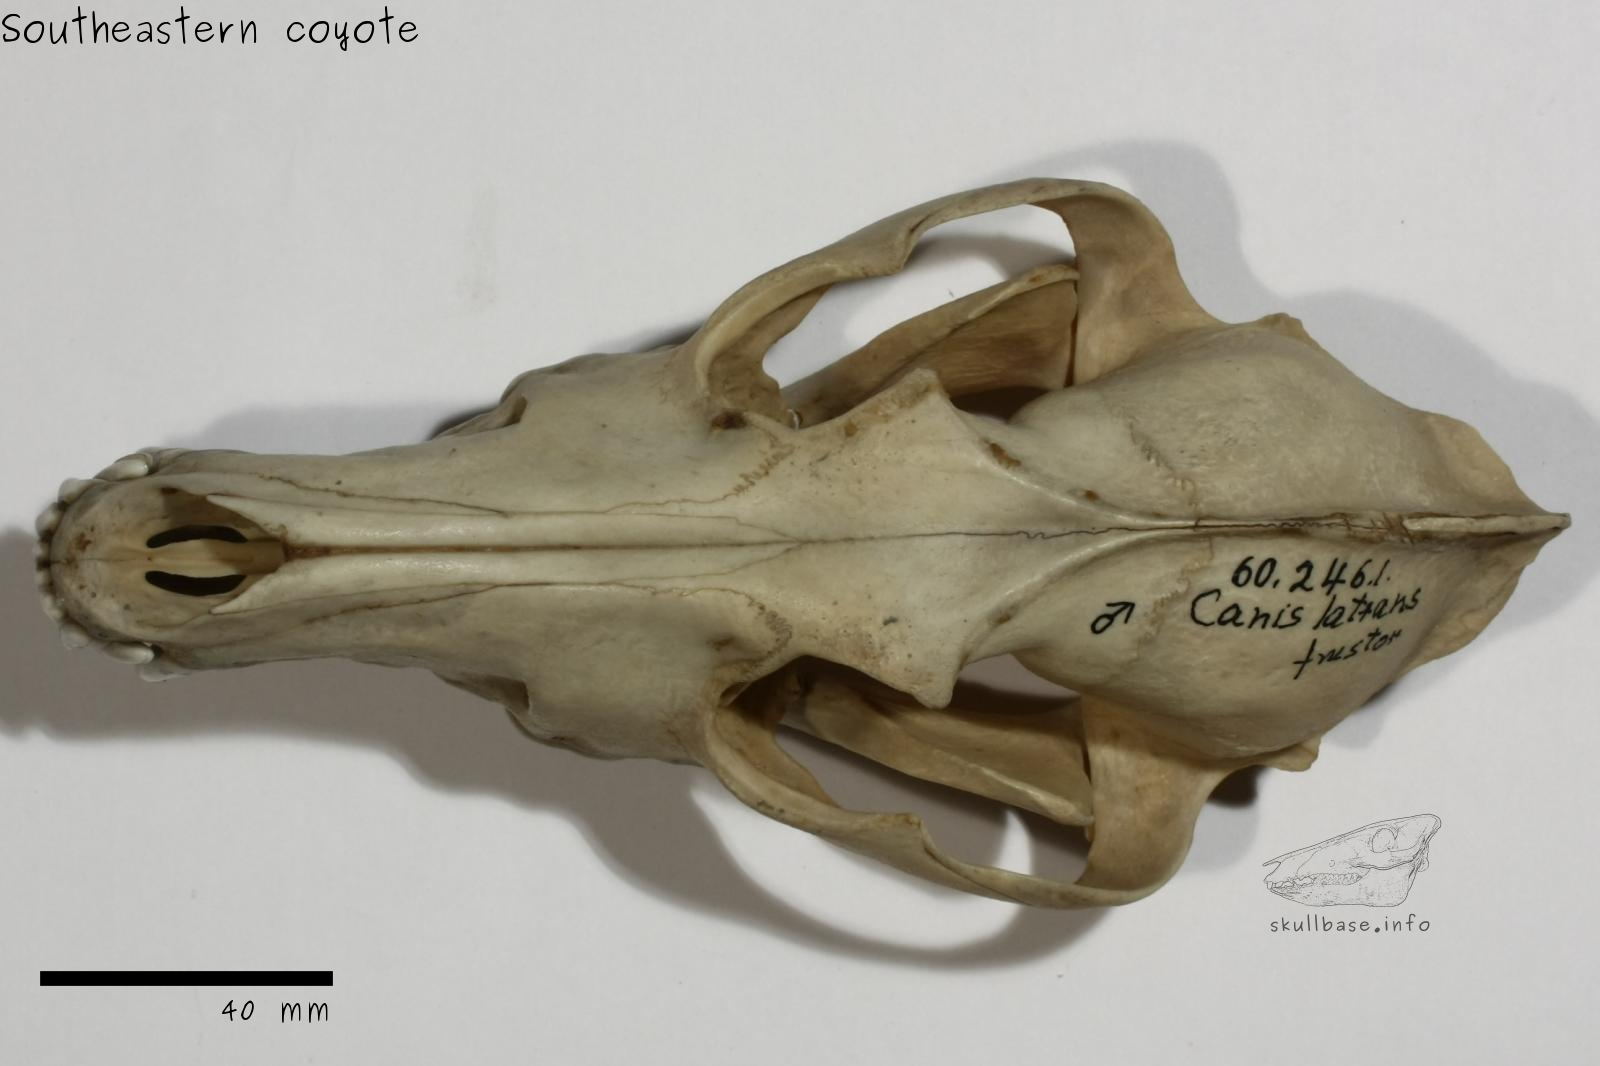 Southeastern coyote (Canis latrans frustor) skull dorsal view